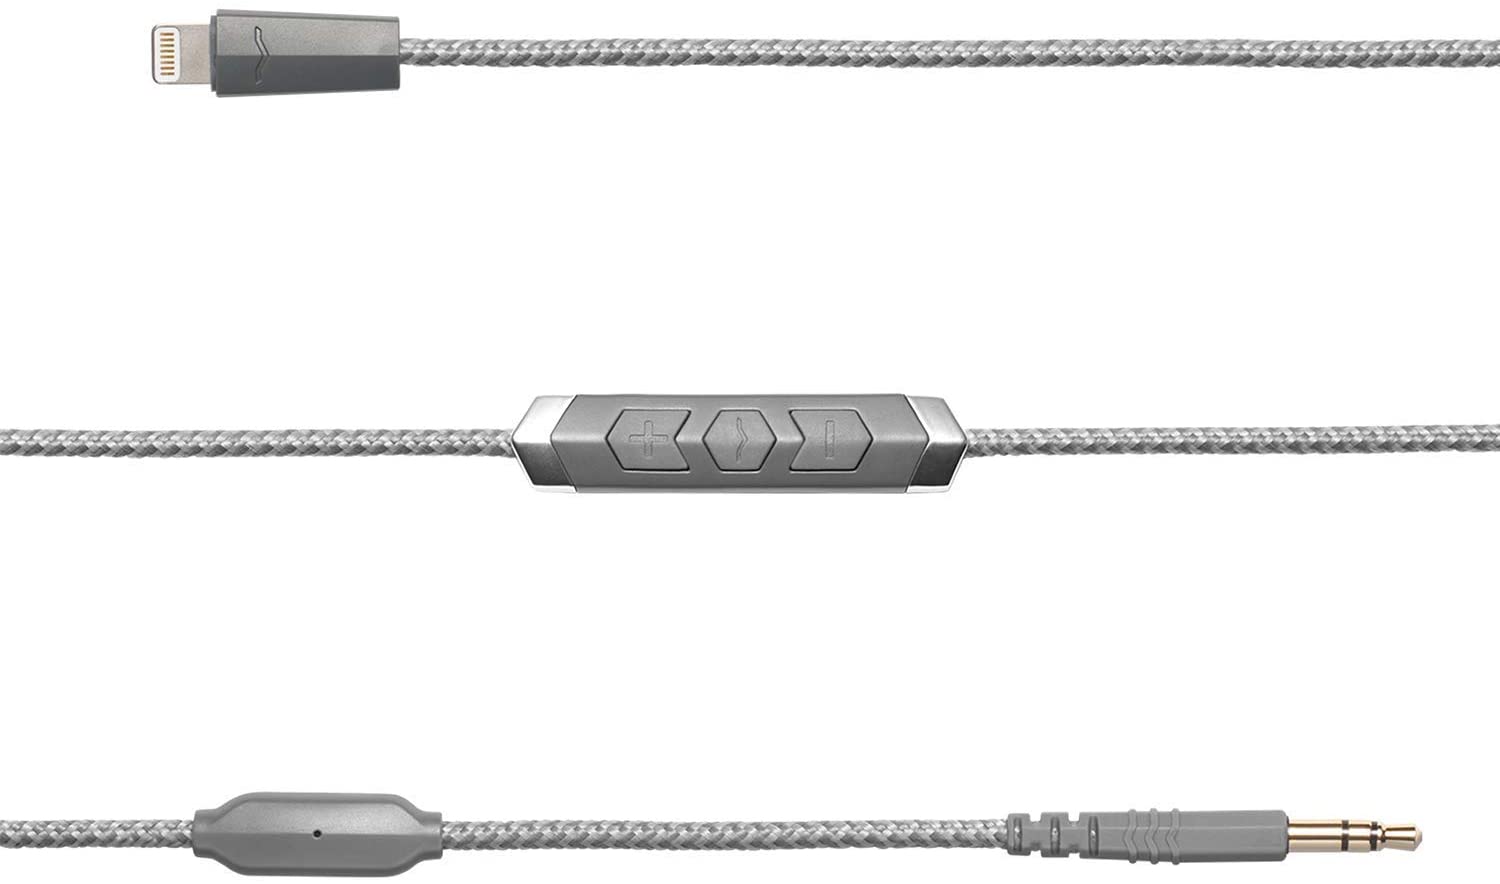 V-MODA Speakeasy DAC/AMP 3-Button Lightning Cable - Grey $23.74 at Amazon